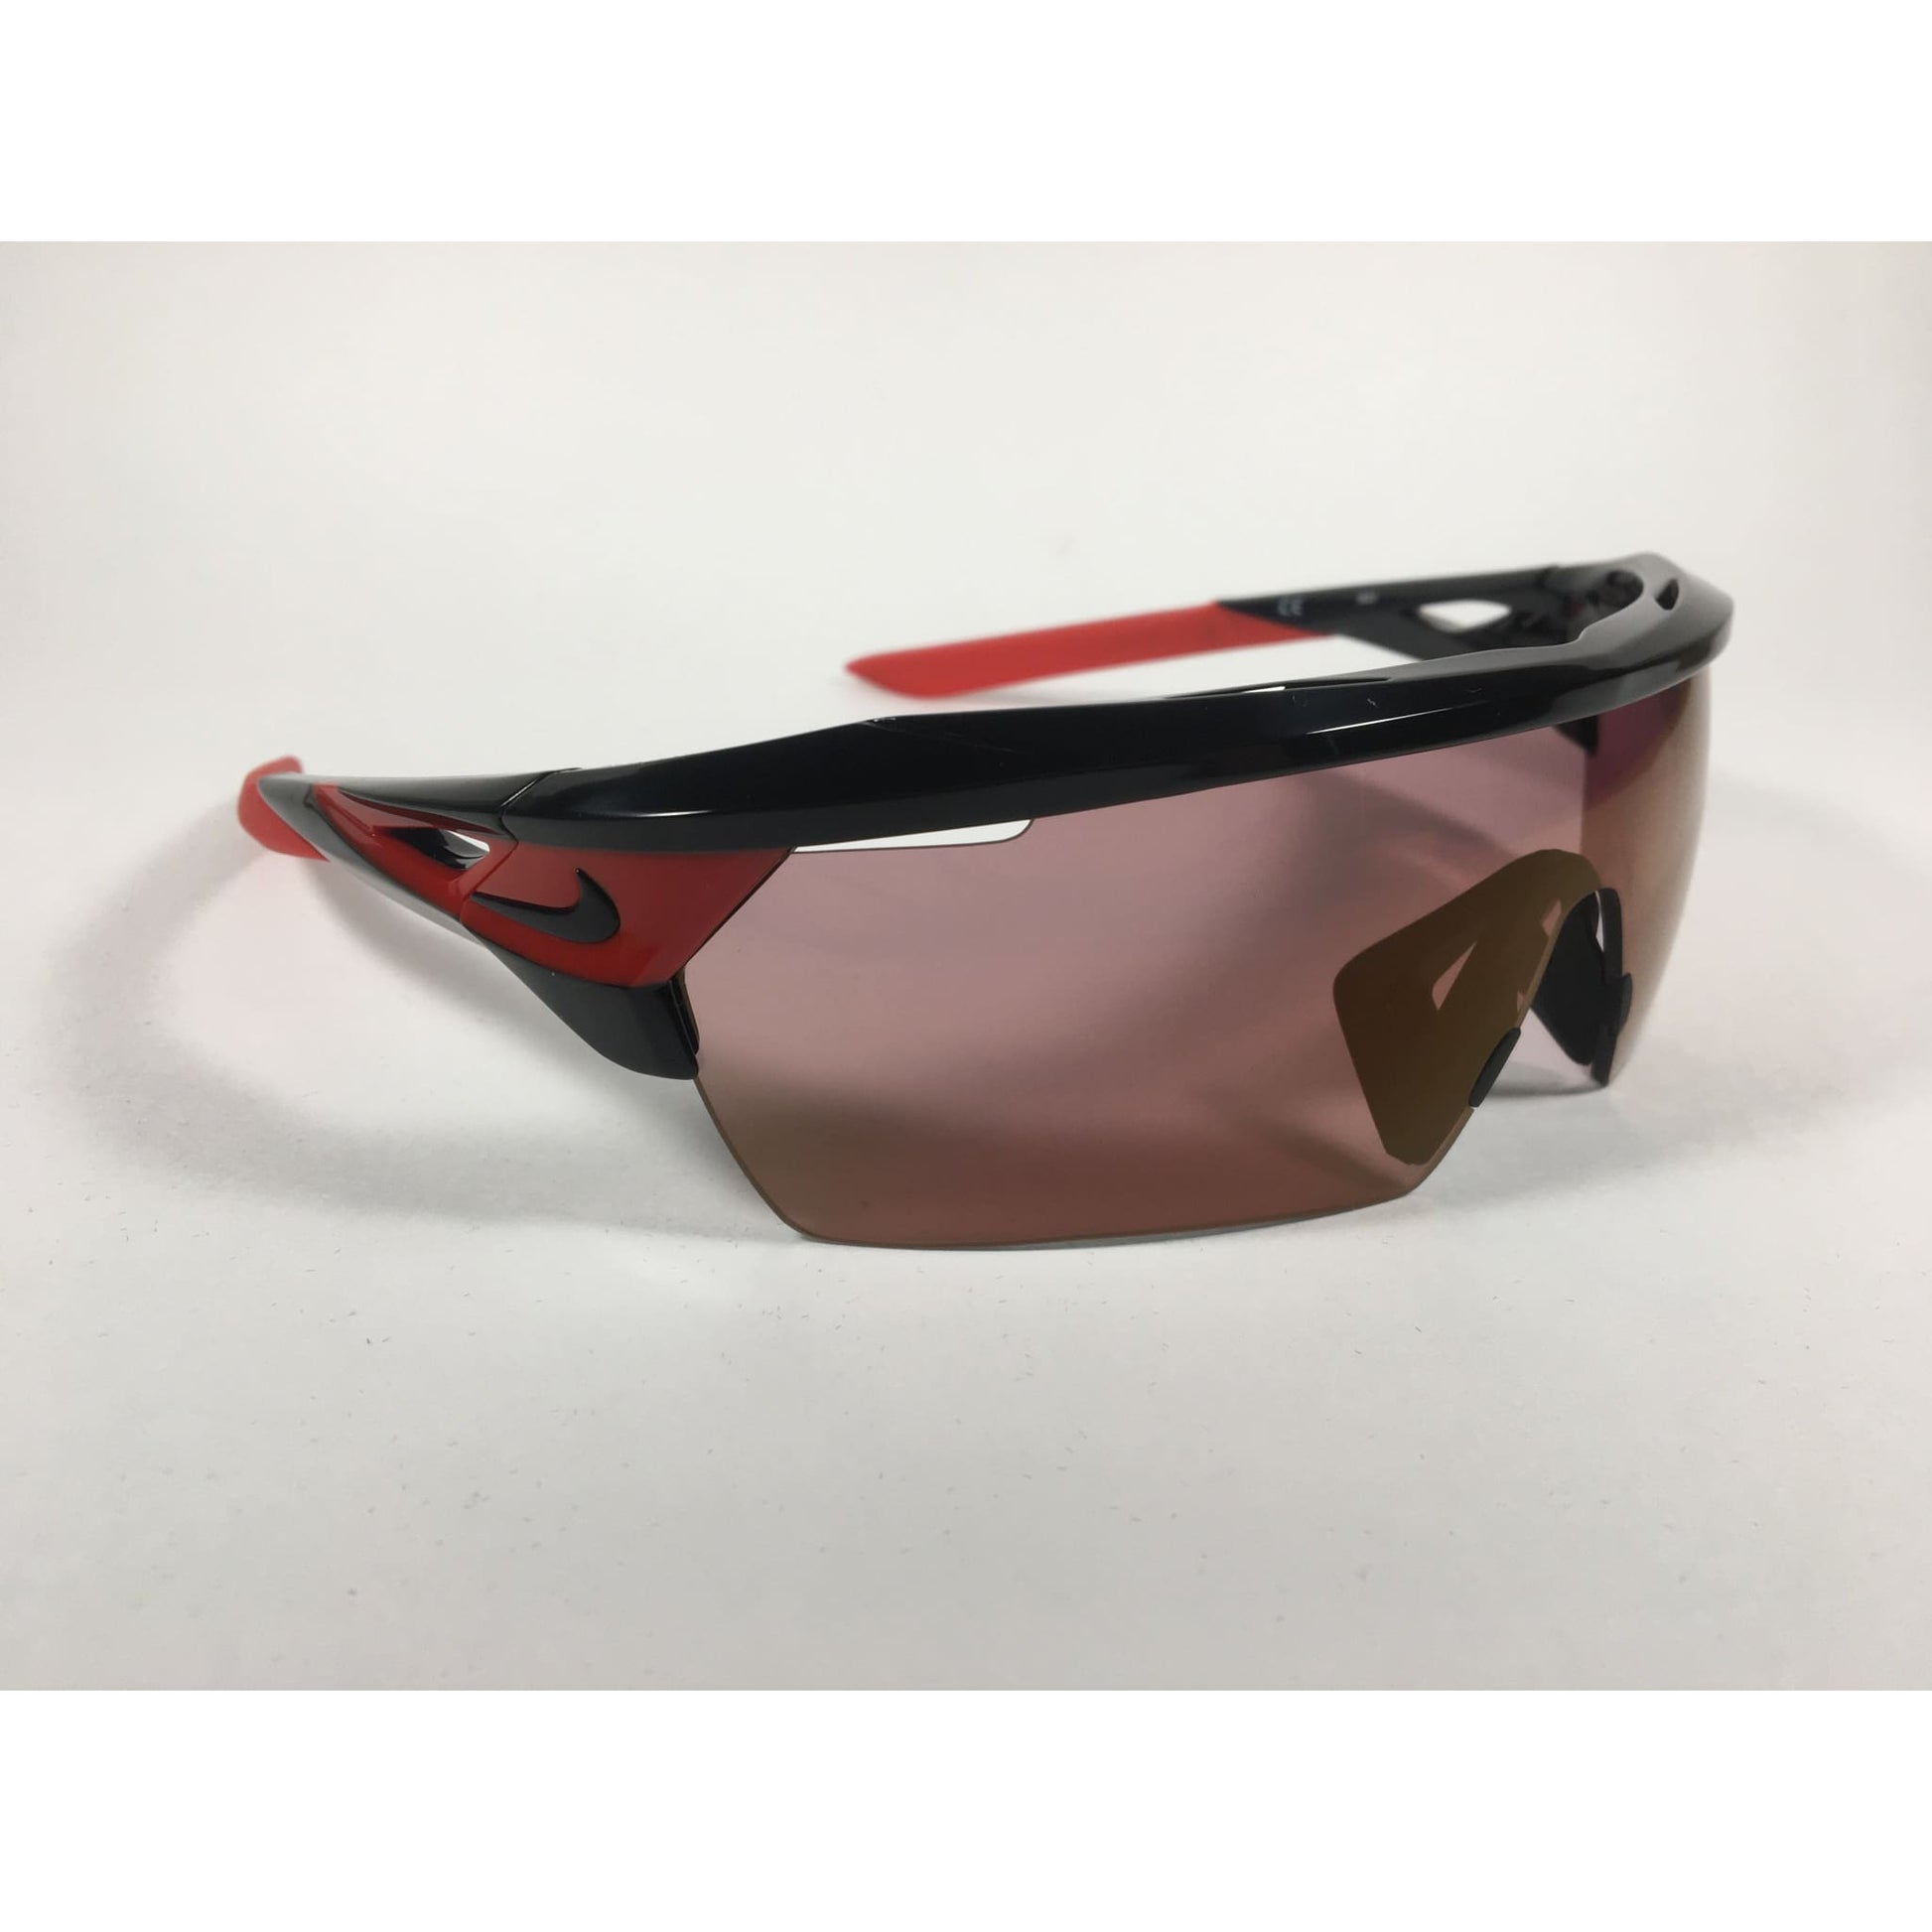 Nike Hyperforce Elite XL Sunglasses EV1189 066 Black Challenge Red Copper Tint Lens - Sunglasses